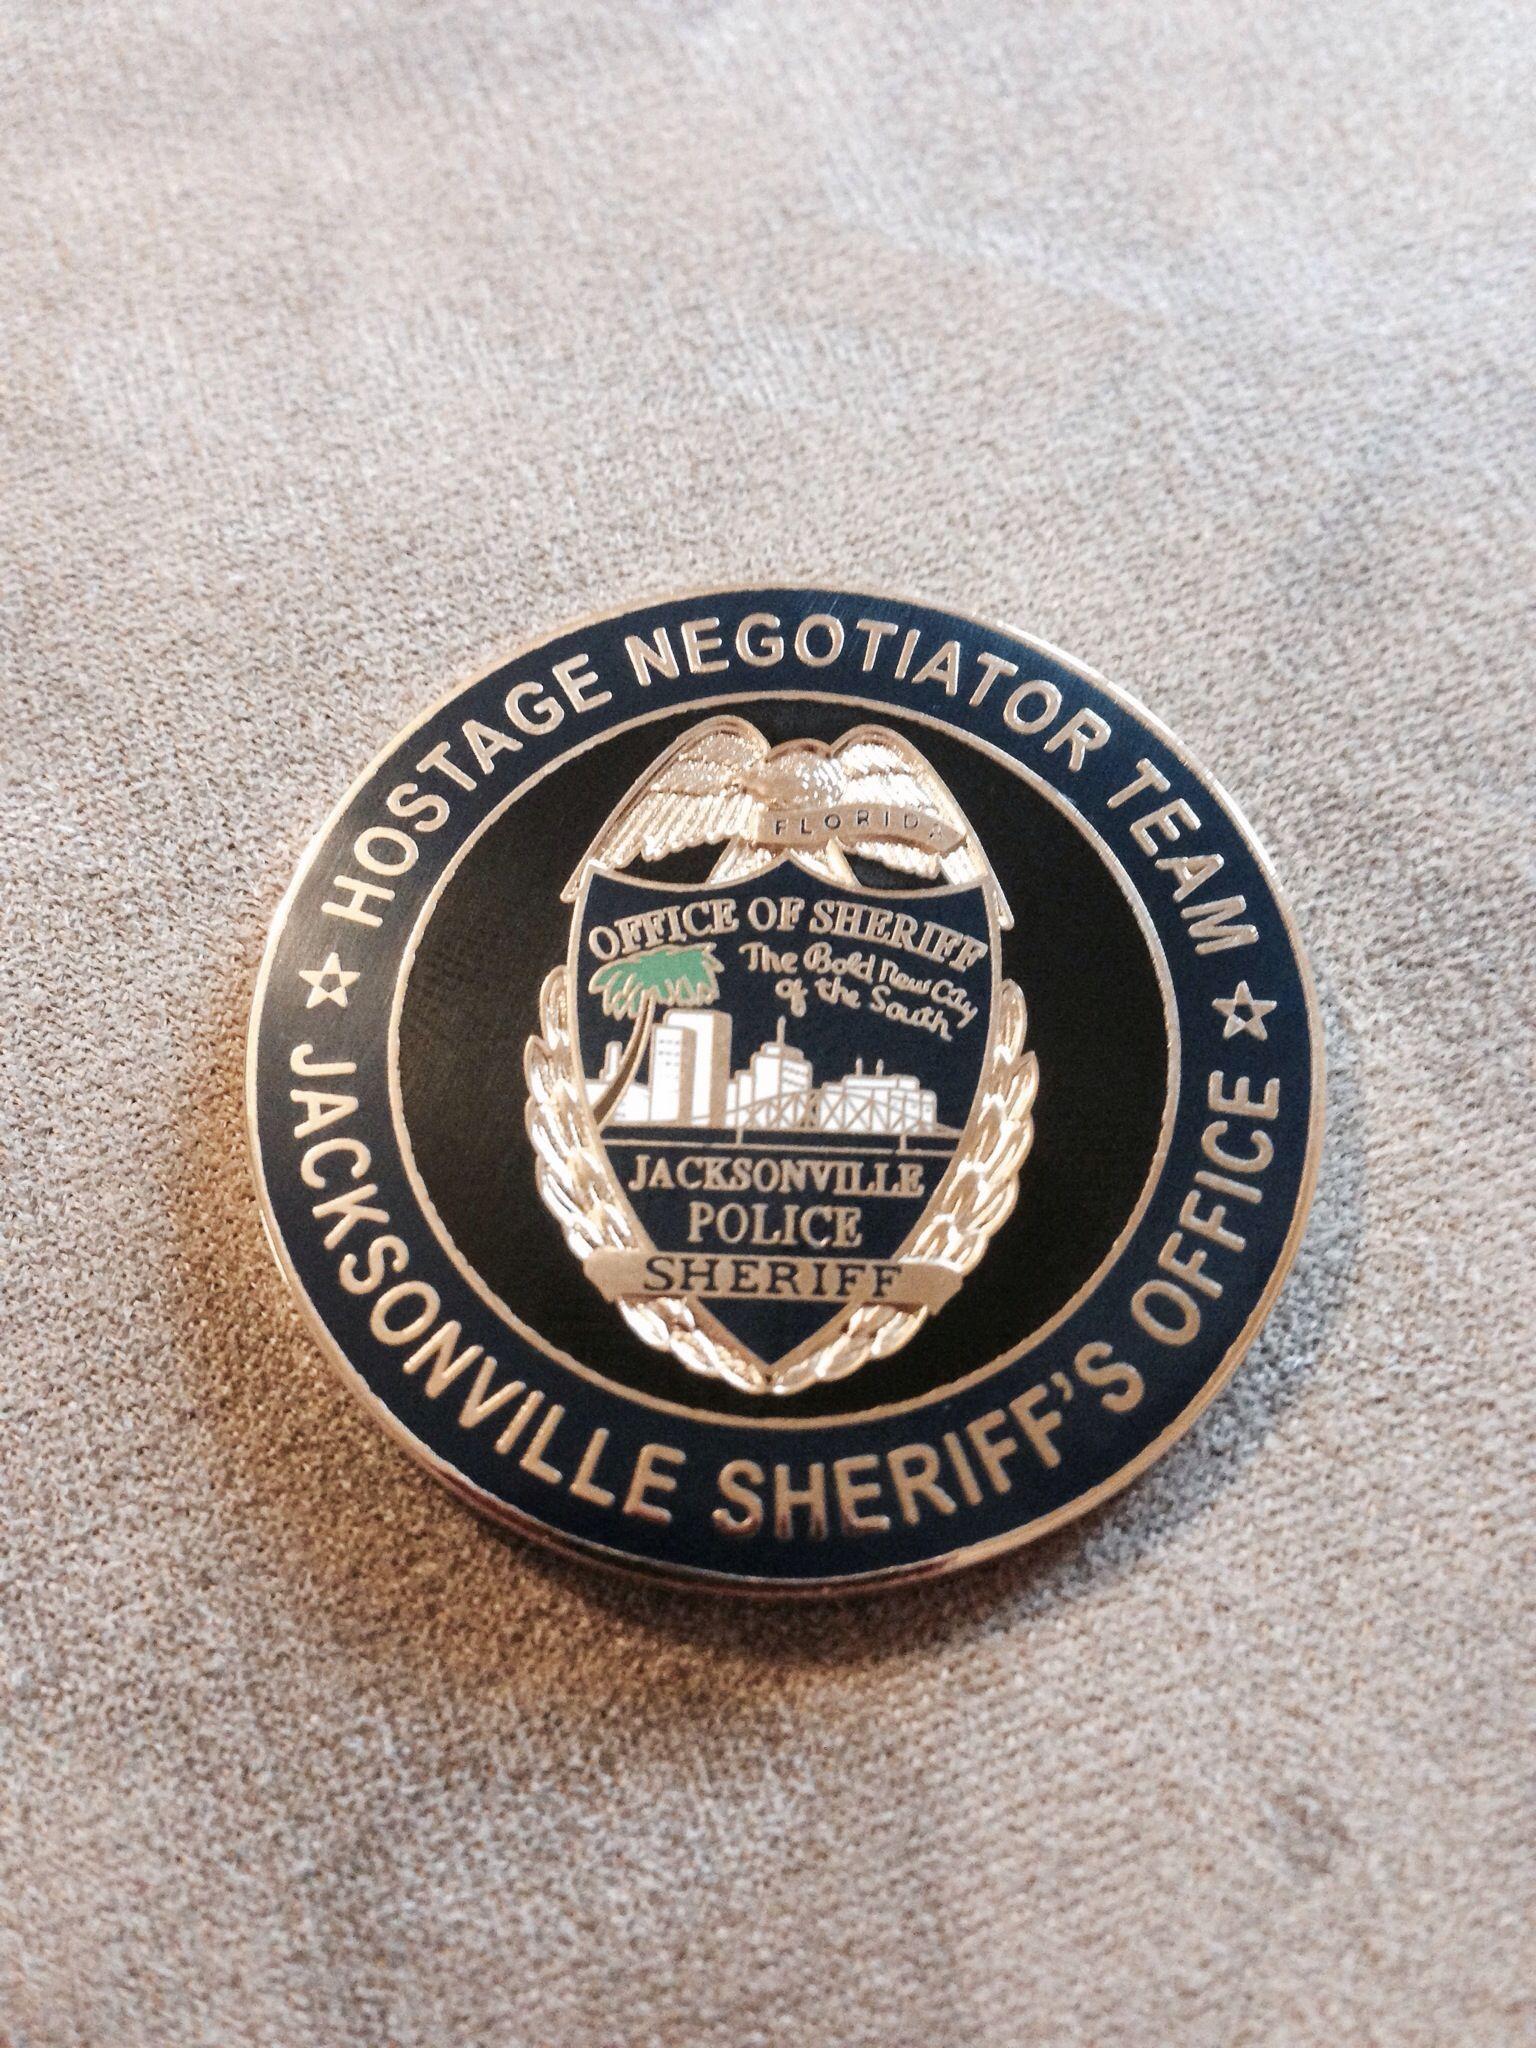 Negotiator Logo - Jacksonville Sheriff's Office Hostage Negotiator Team | HNT | Police ...